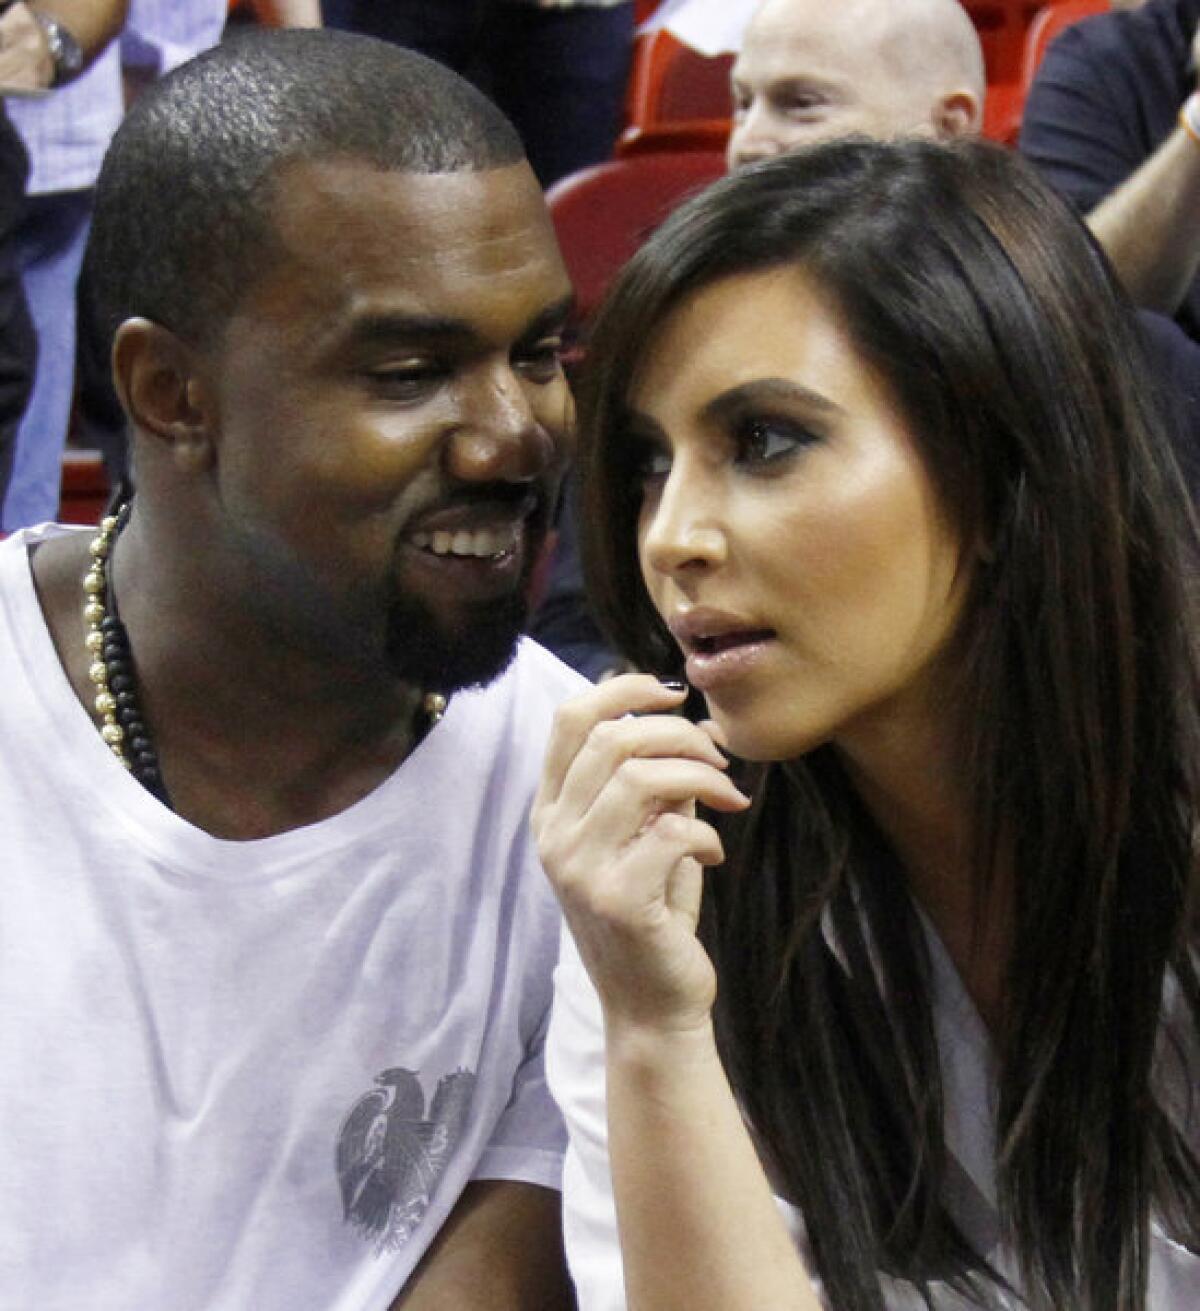 Kim Kardashian with Kanye West at a Miami Heat-New York Knicks game in Miami.